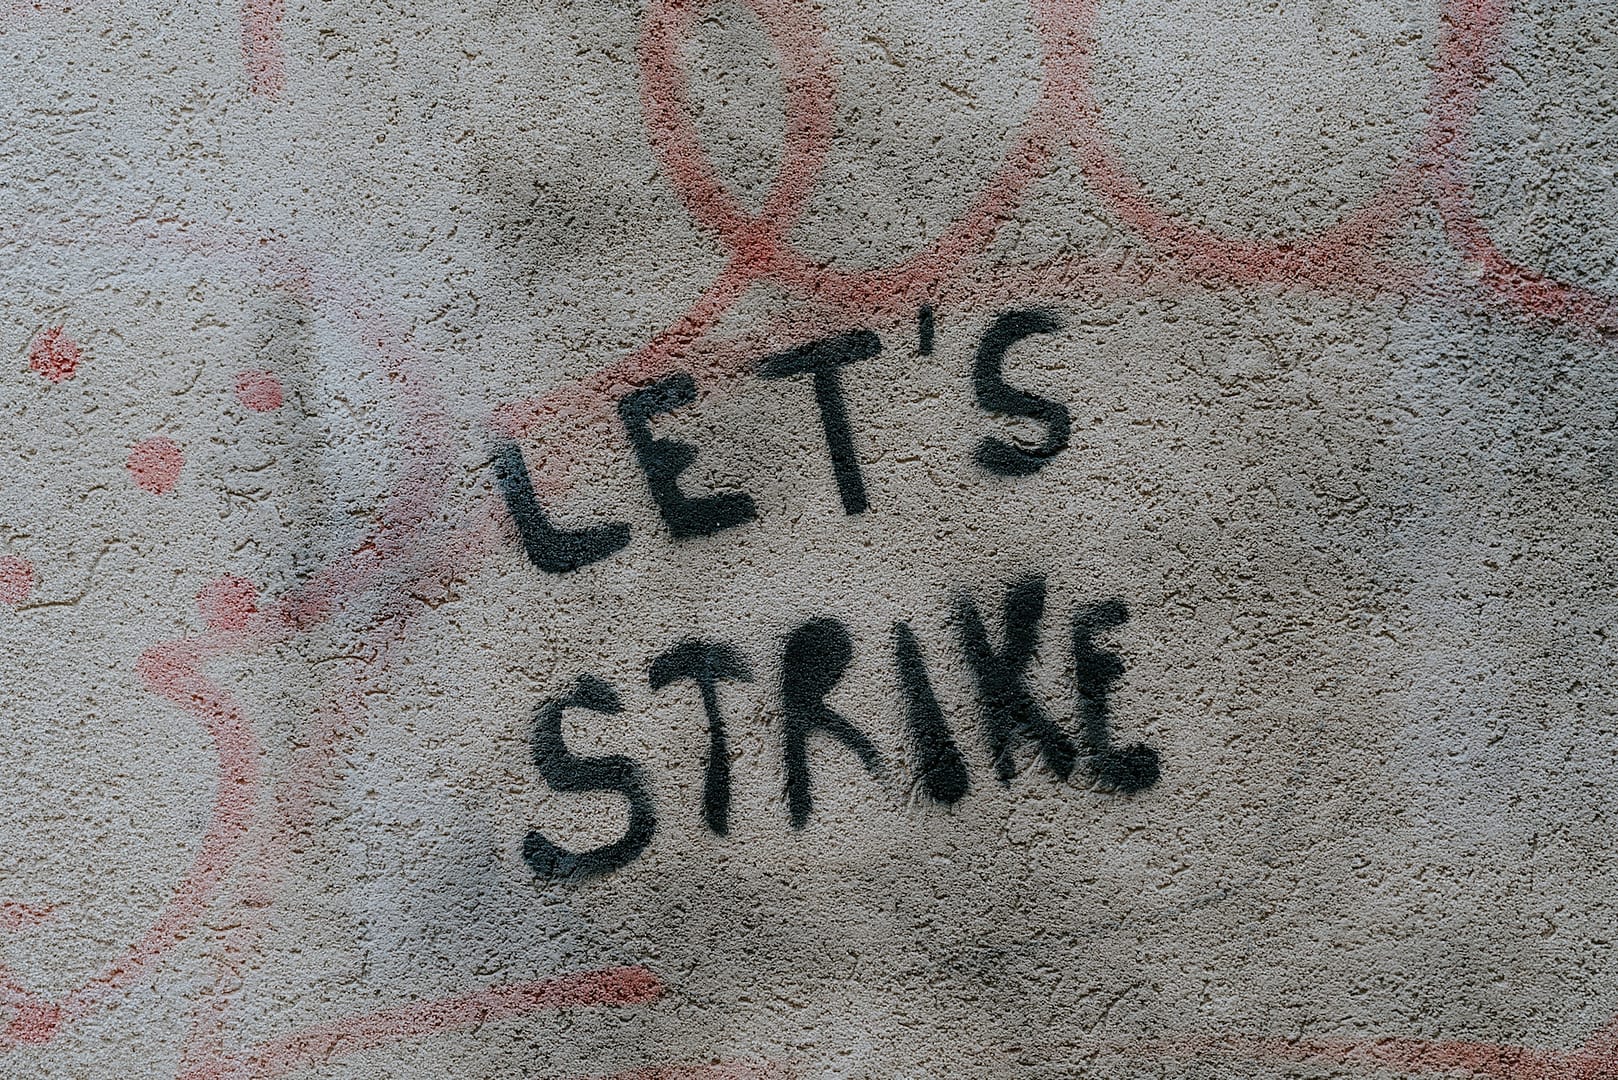 graffiti saying "lets strike"